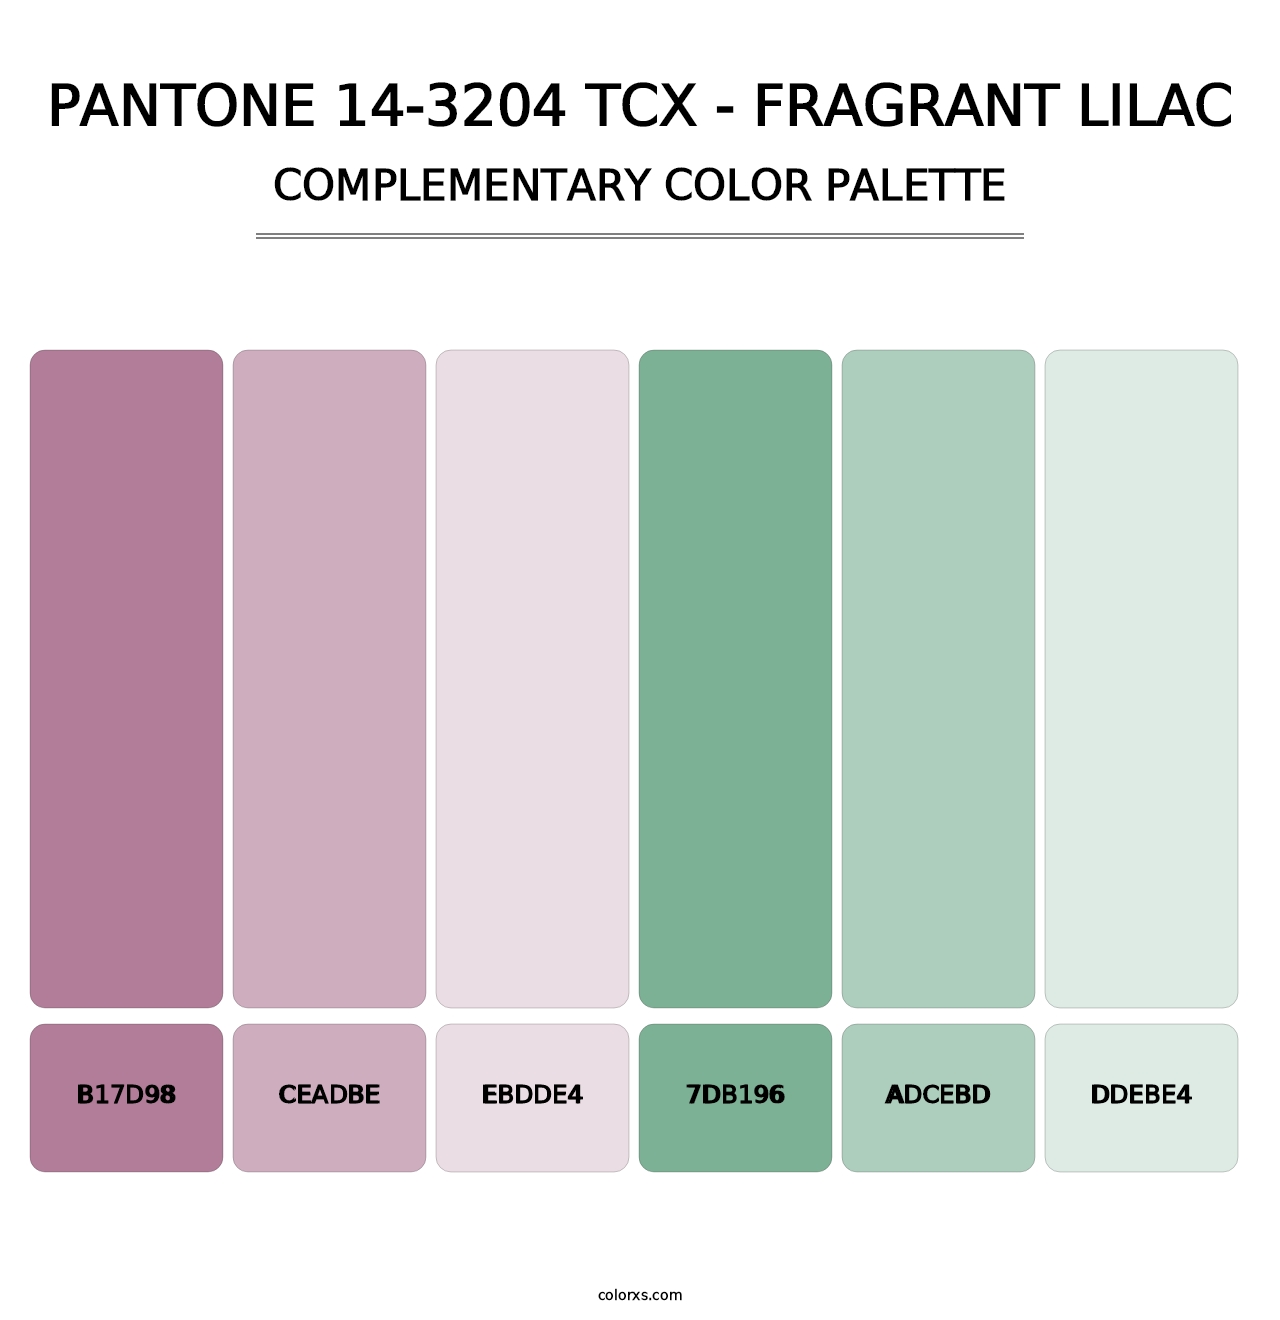 PANTONE 14-3204 TCX - Fragrant Lilac - Complementary Color Palette